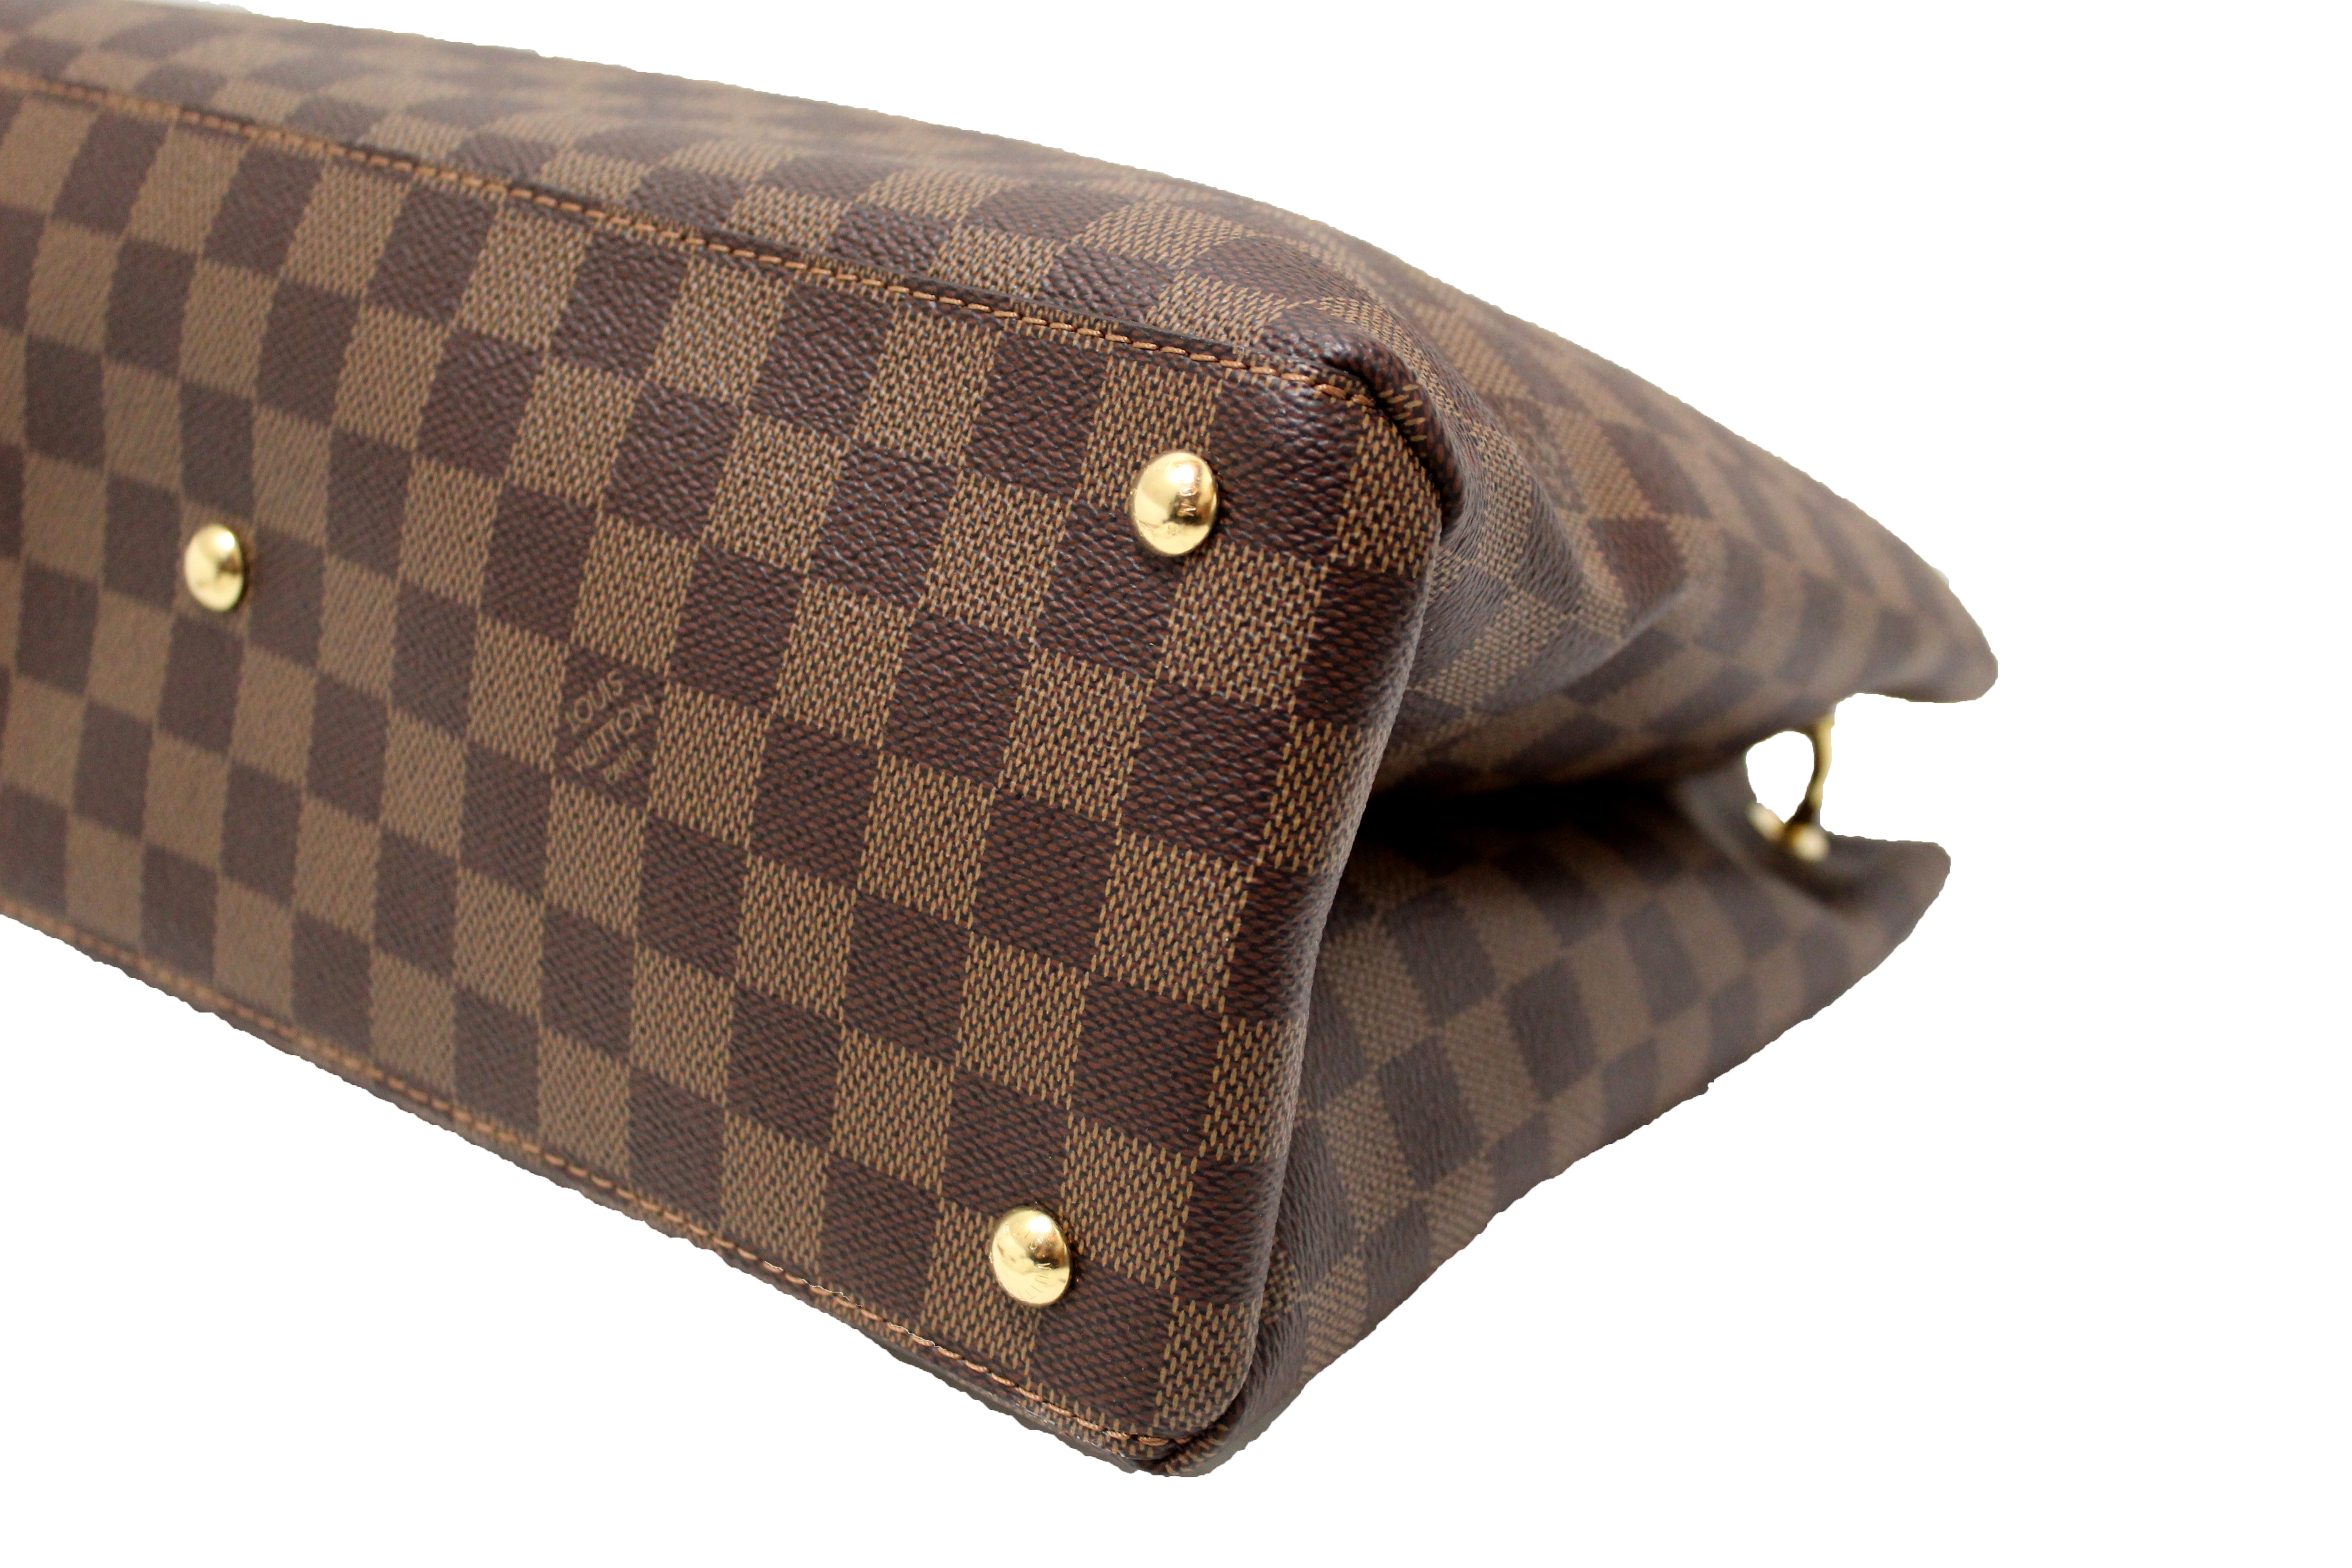 Louis Vuitton Riverside Damier Ebene Monogram Handbag Online